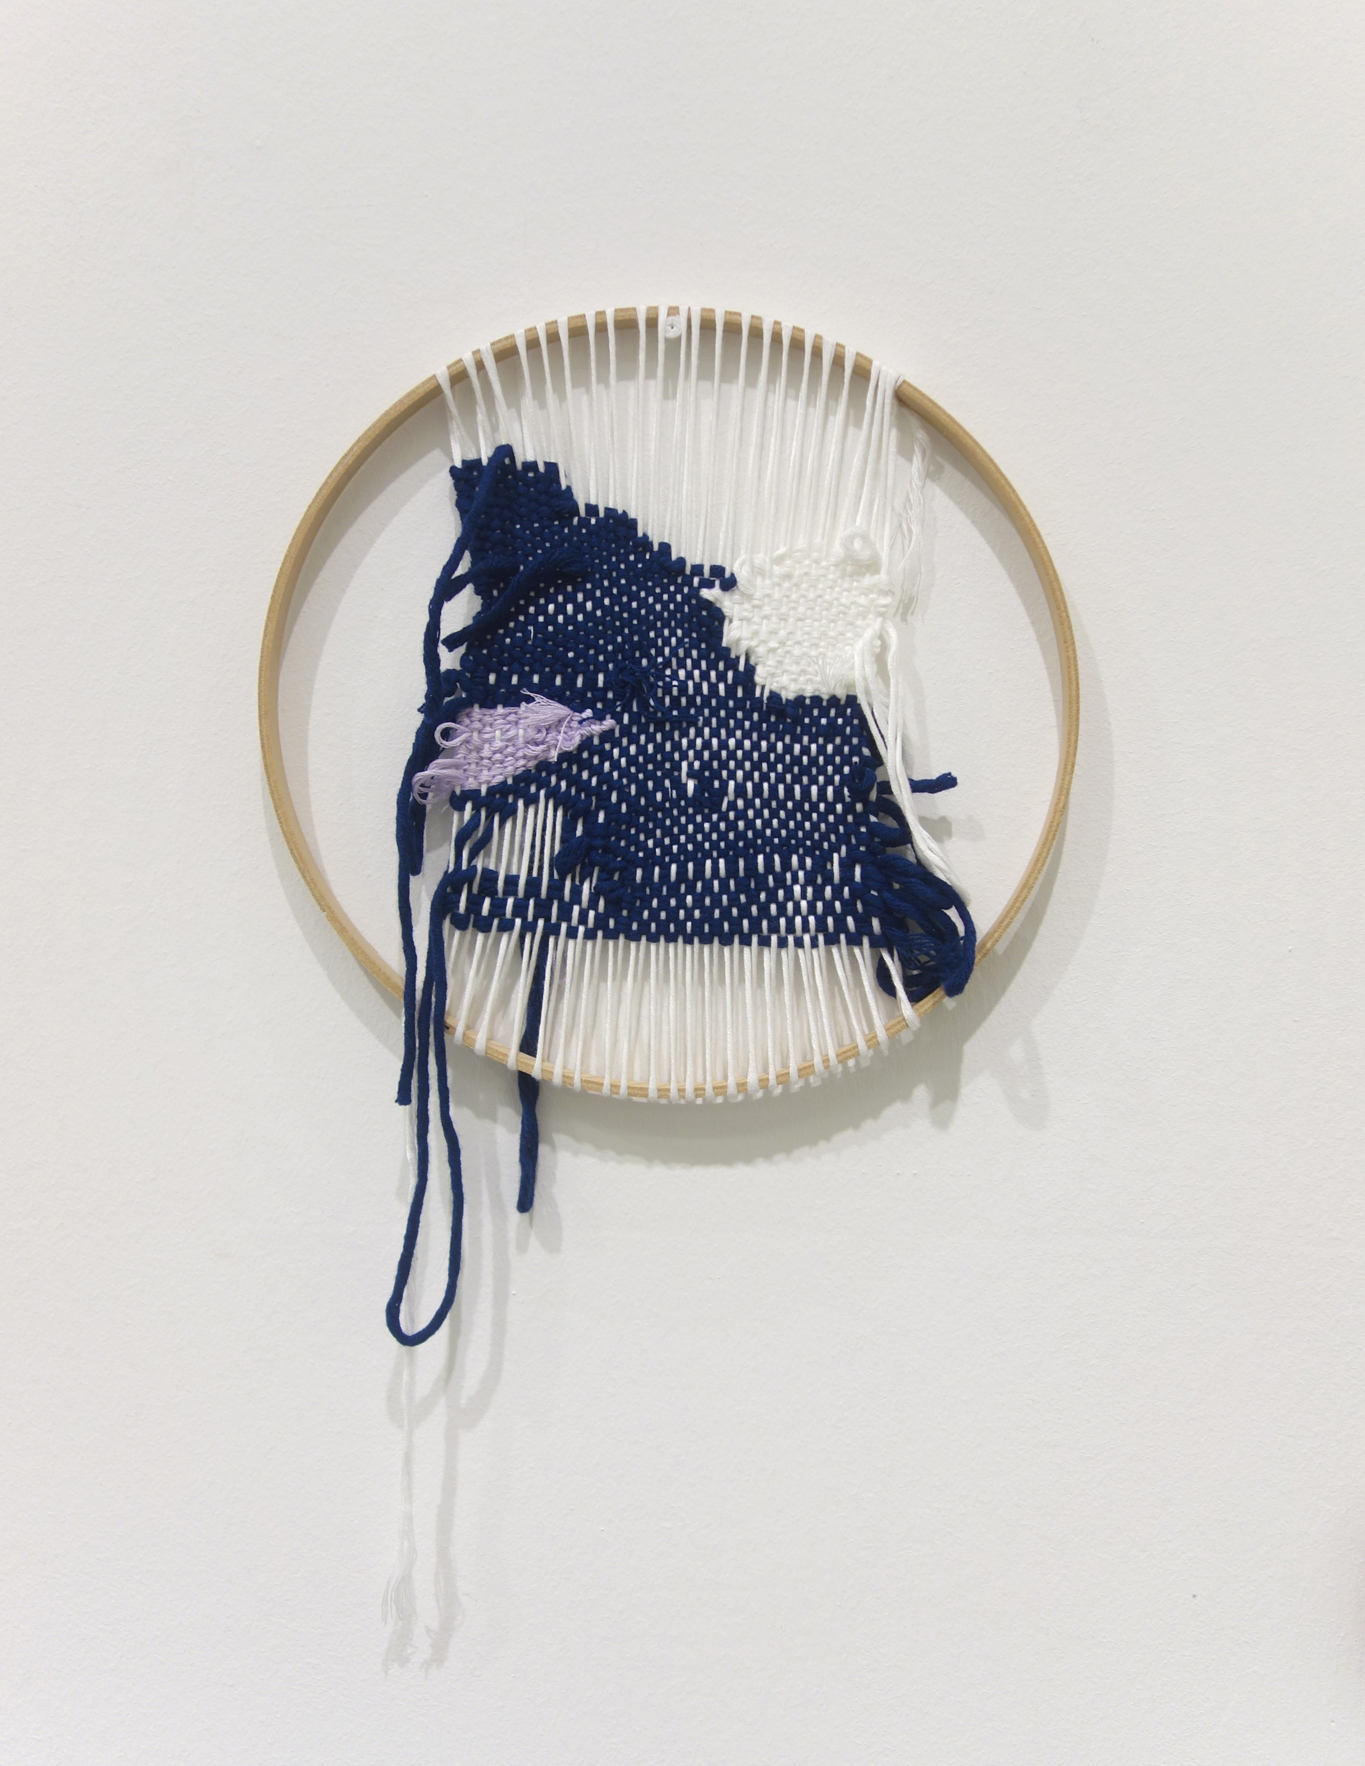  Izziyana Suhaimi  Cross Section of Bone VI  2015 Cotton thread woven on wooden hoop H33 x W27 cm 